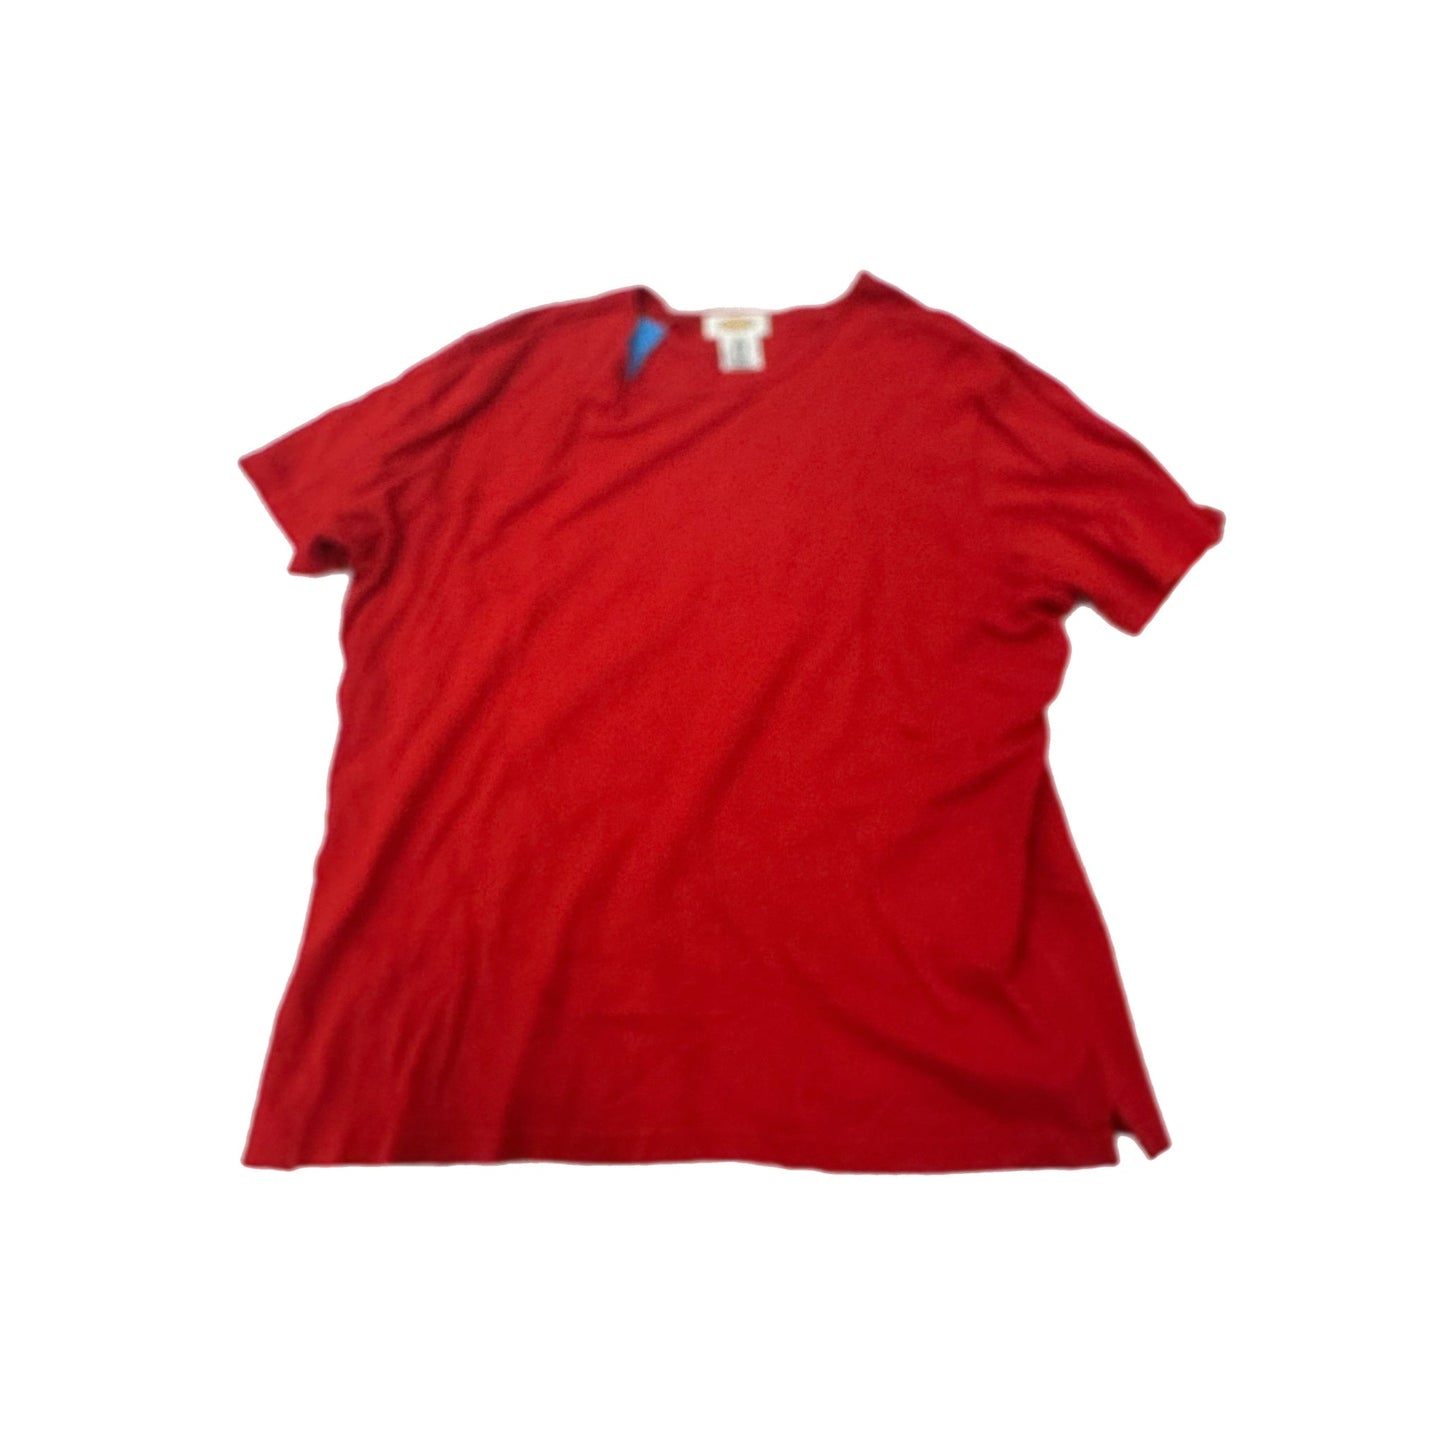 Top Short Sleeve Basic By Talbots  Size: Xl